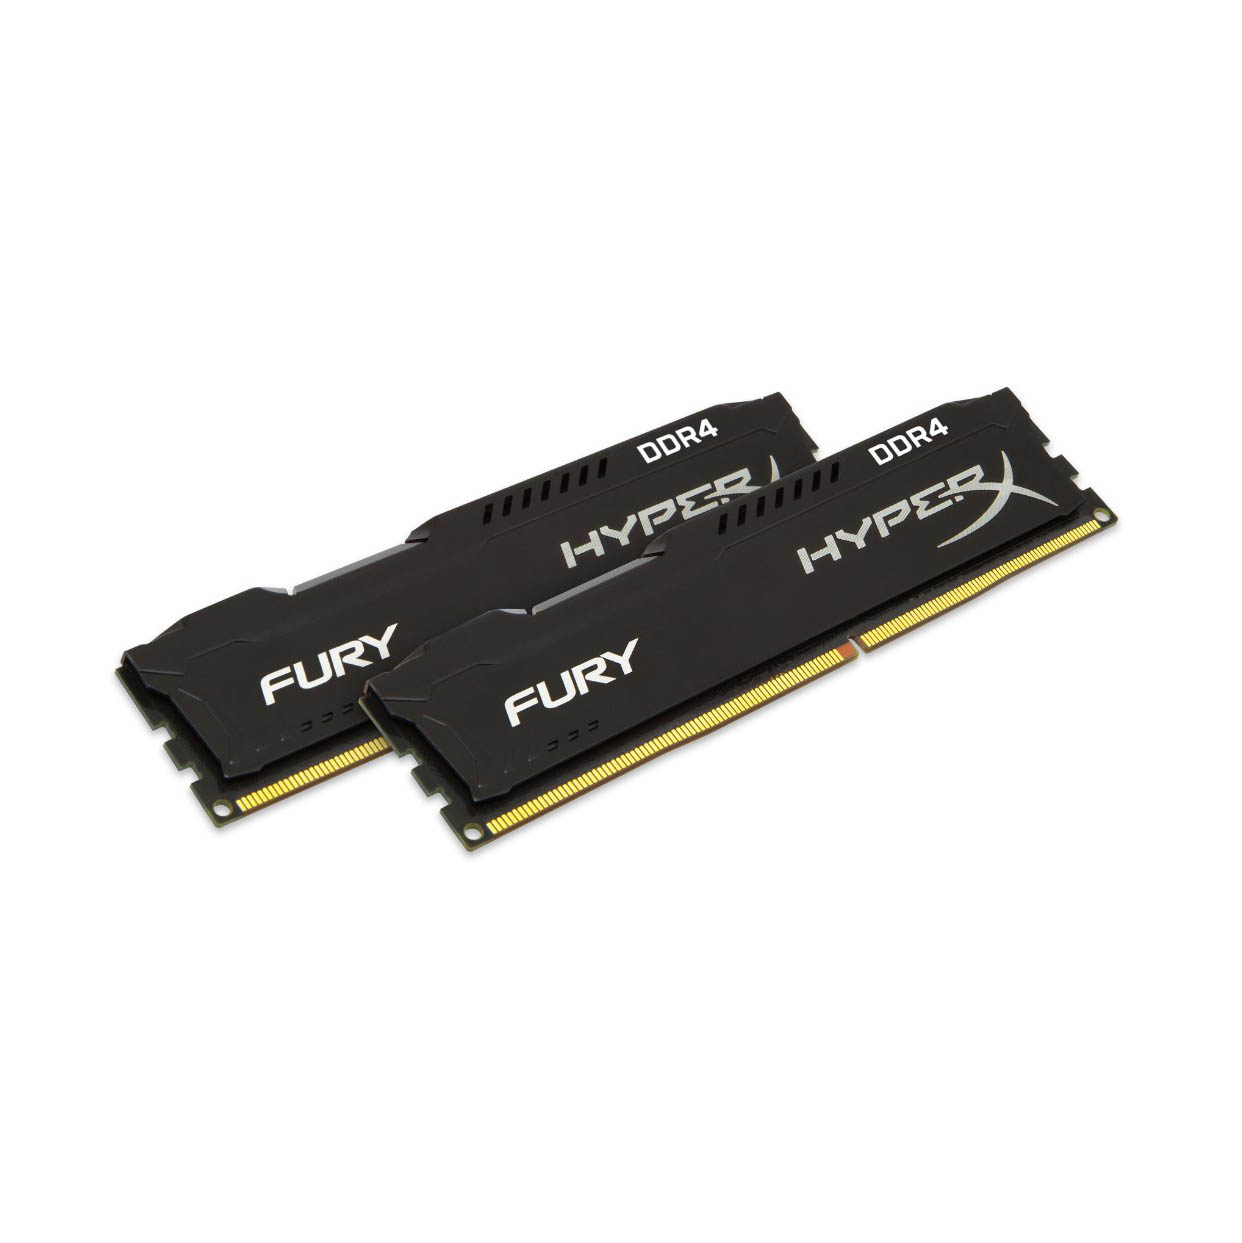 Ram Kingston HyperX Fury Black 16GB DDR4 Bus 2400Mhz</a>
					<form action=